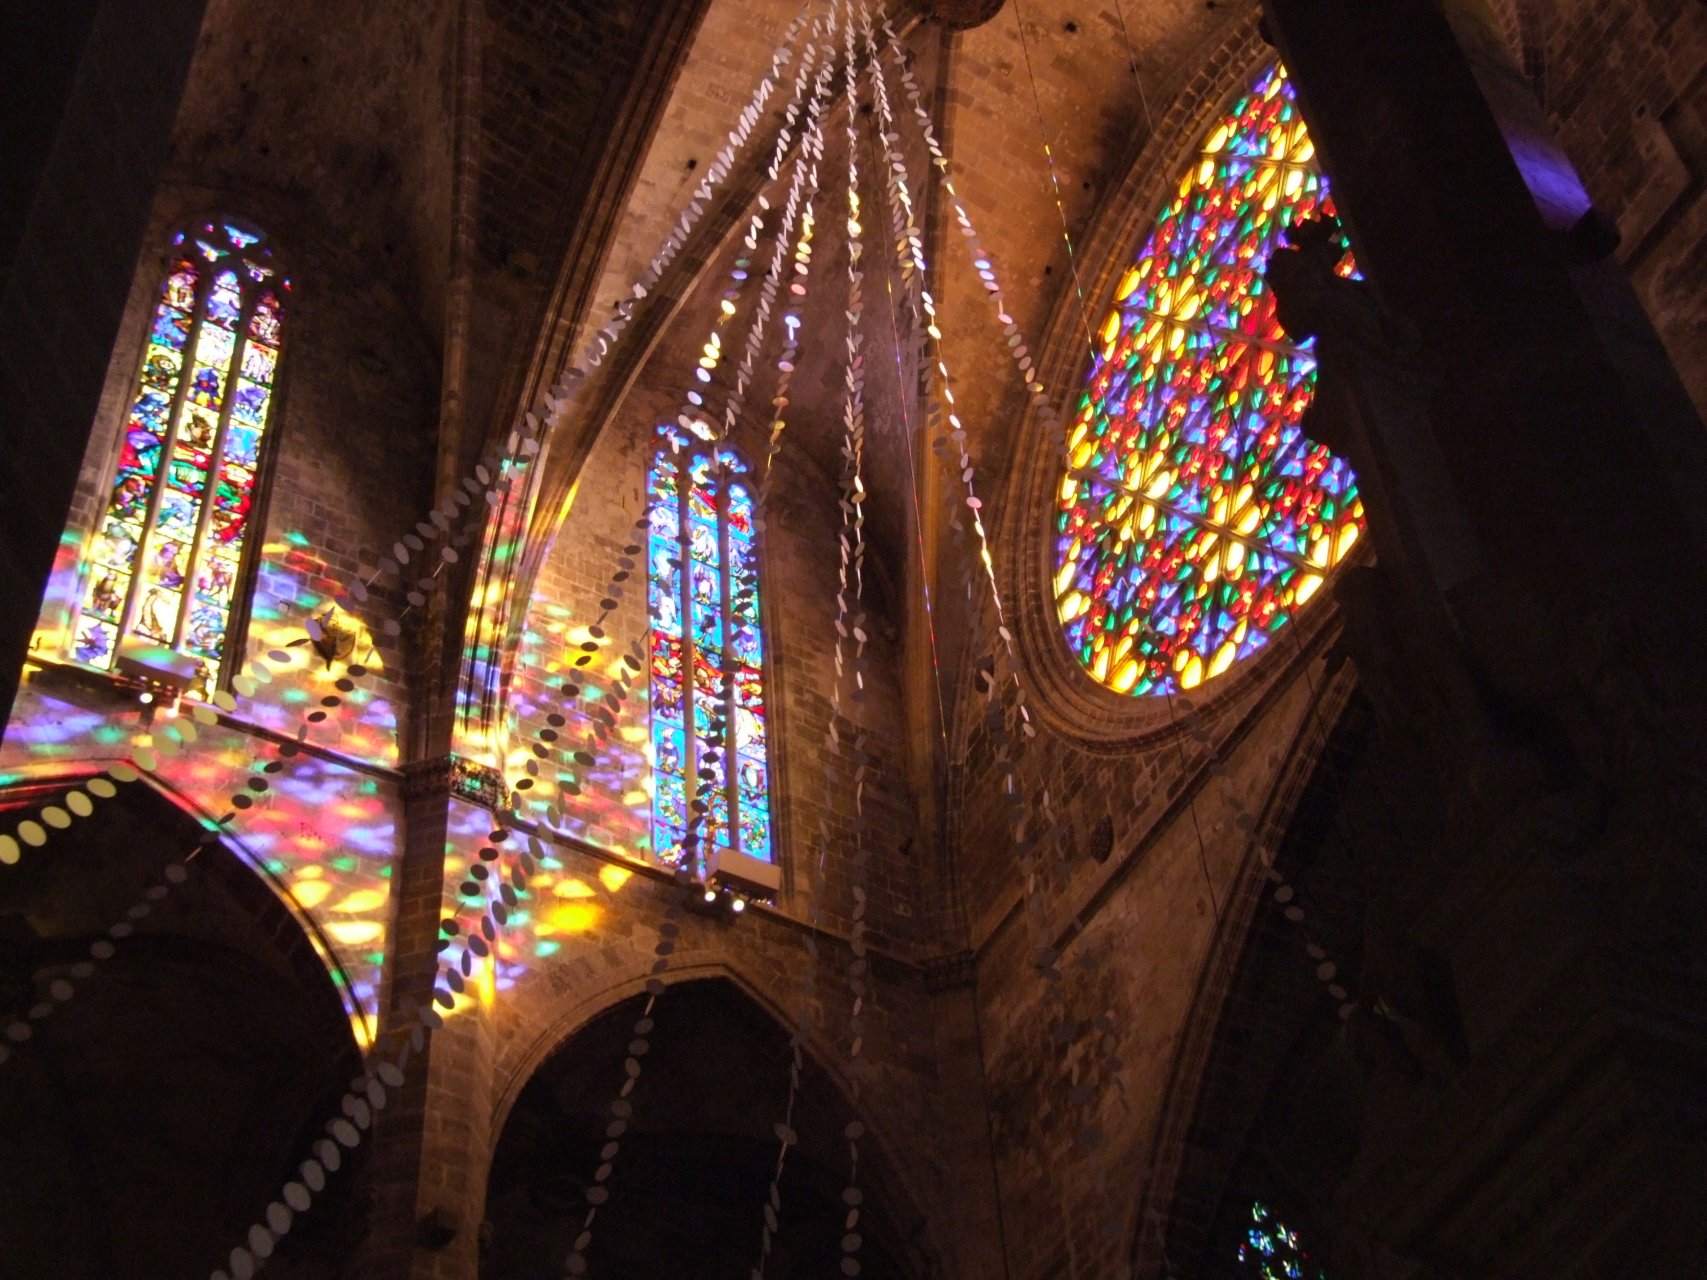 Ogromne witraże zdobiące okna w katedrze La Seu